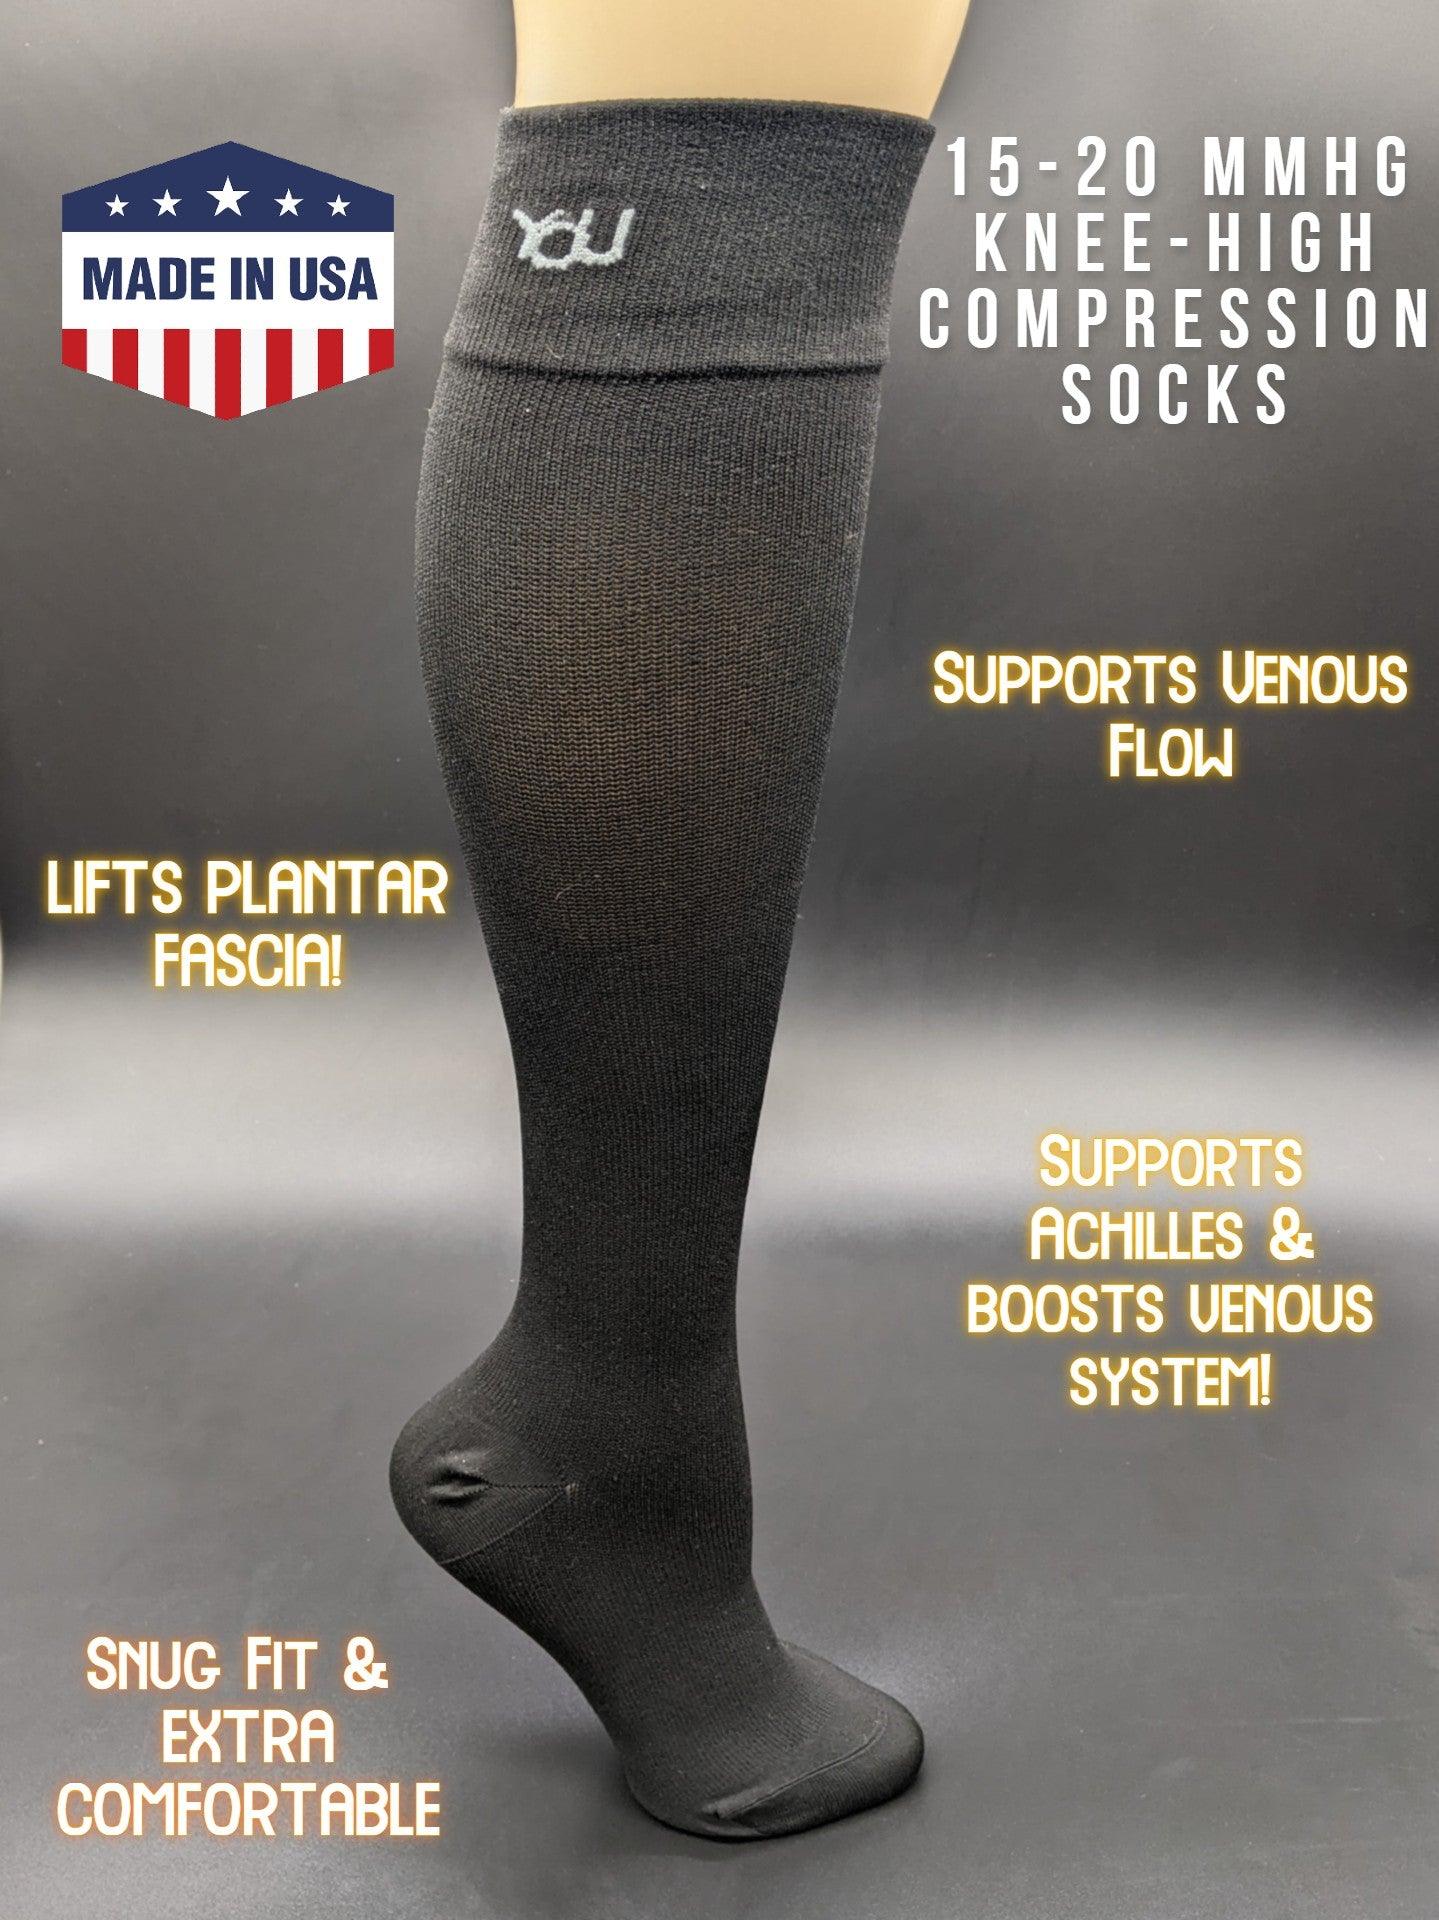 1 Pair Zip Sox Zip Up Compression Socks Size Small Medium Black S/M SEE  COND (W)